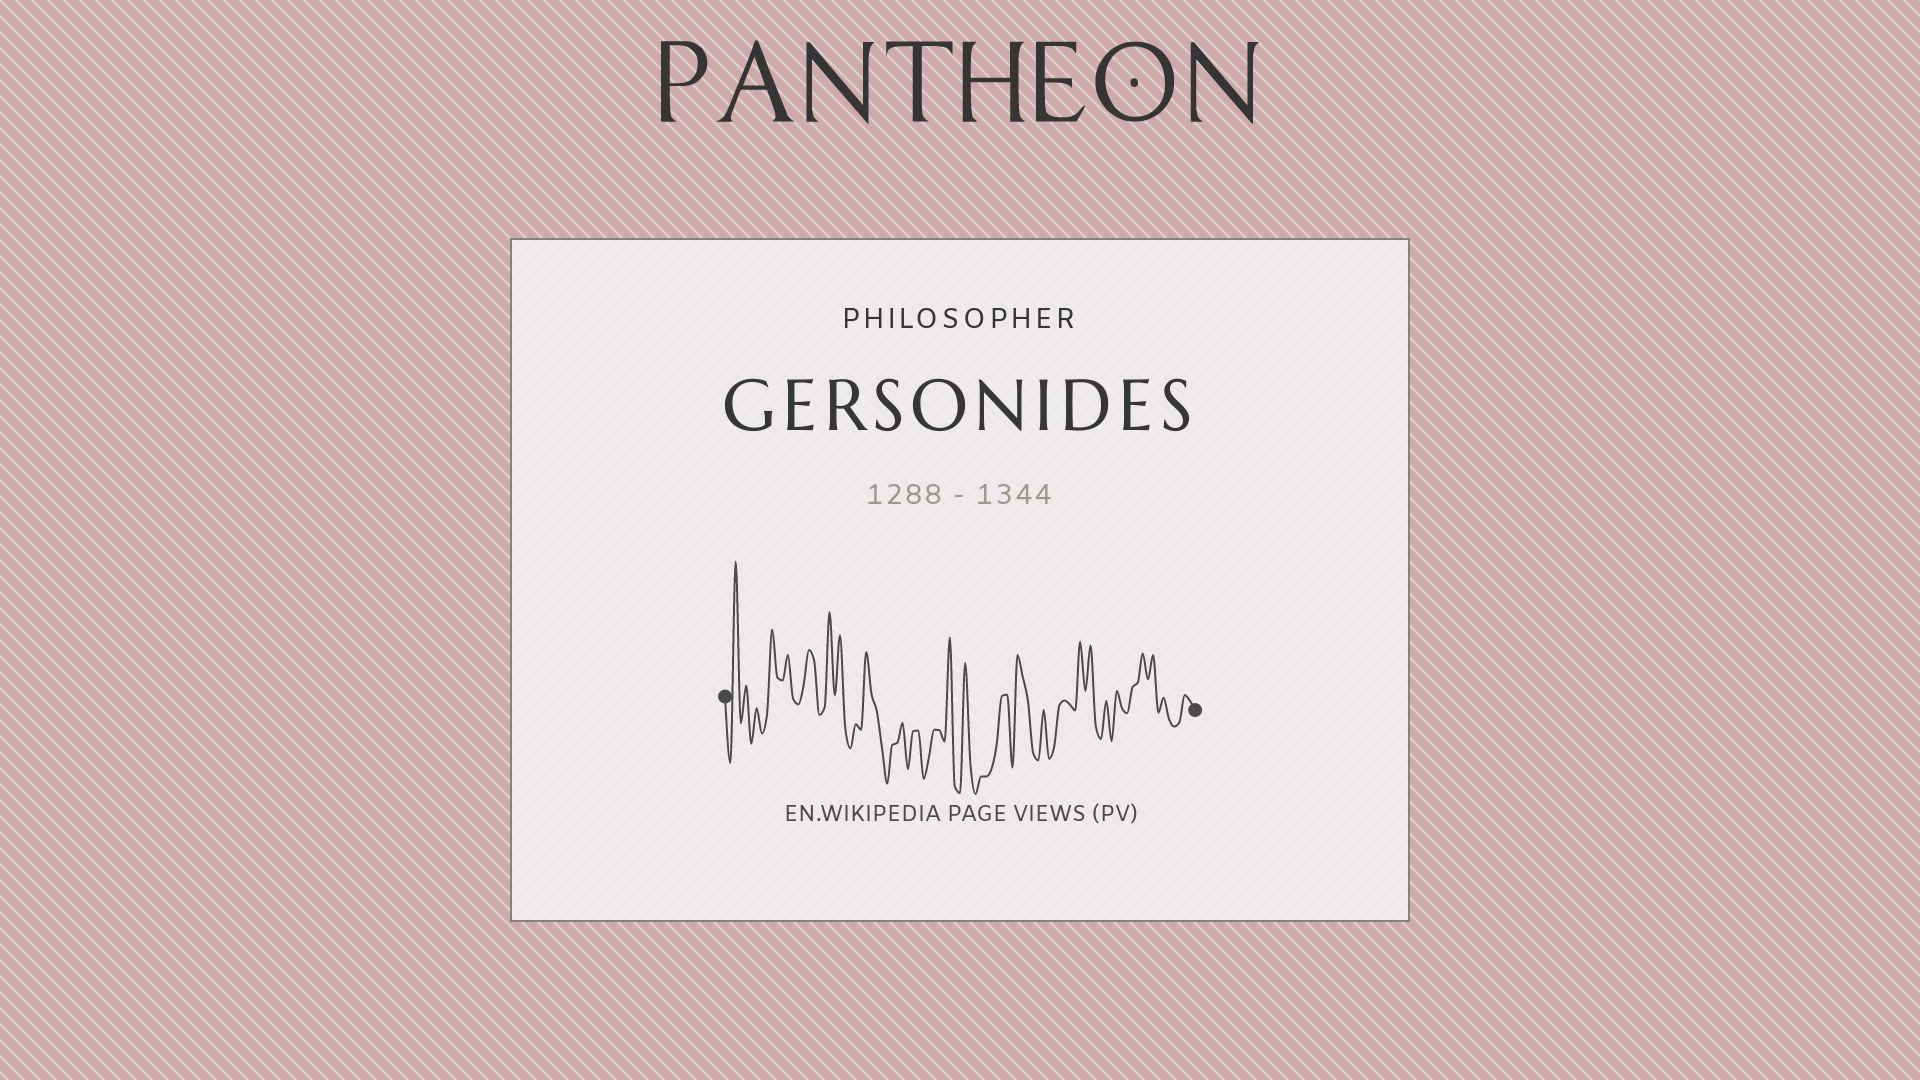 Gersonides biography